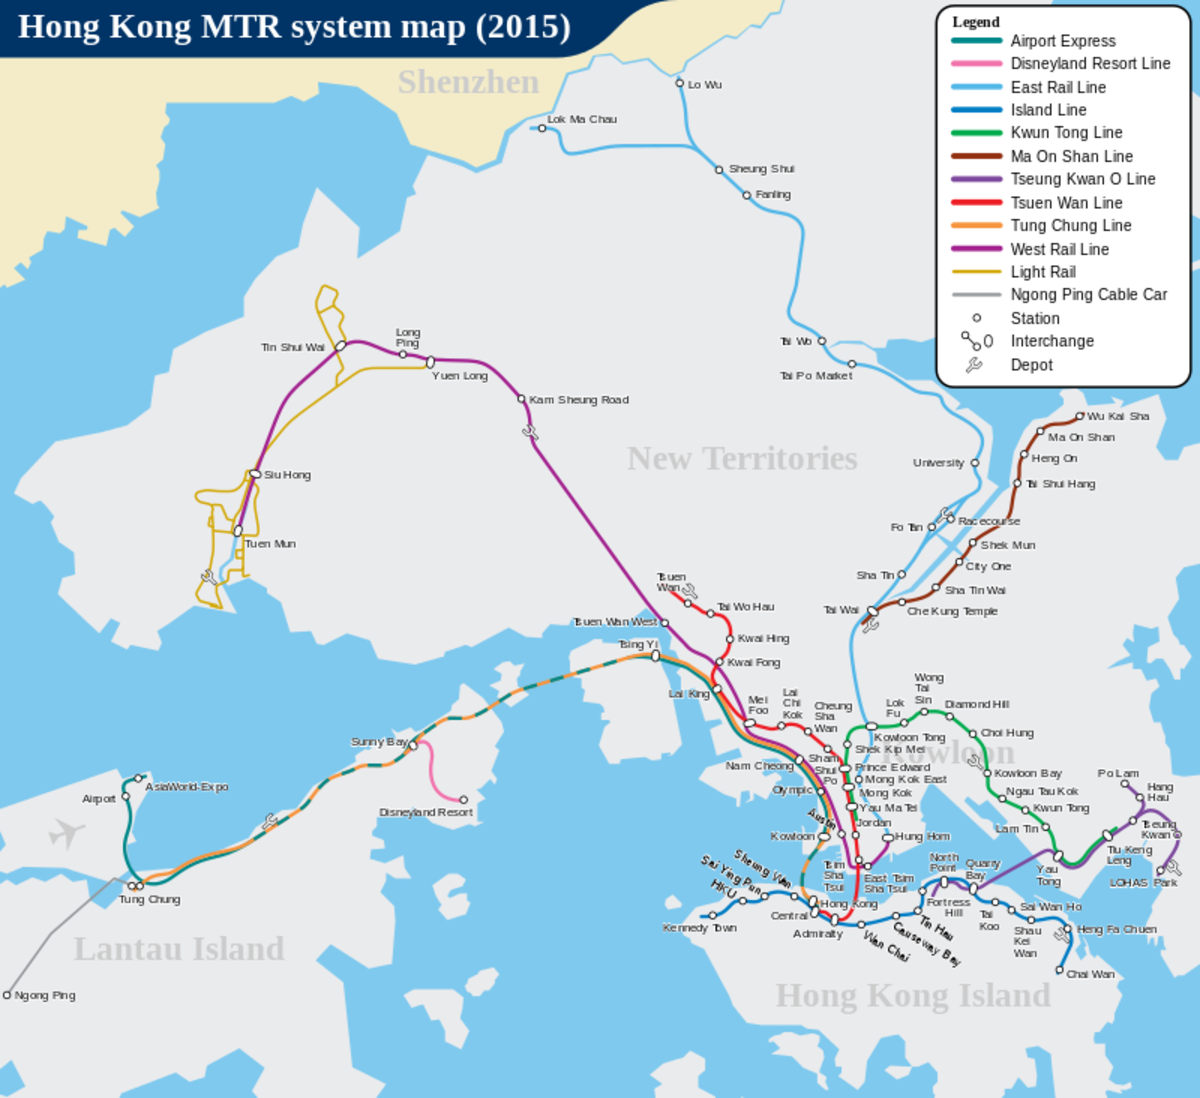 The Hong Kong MTR System